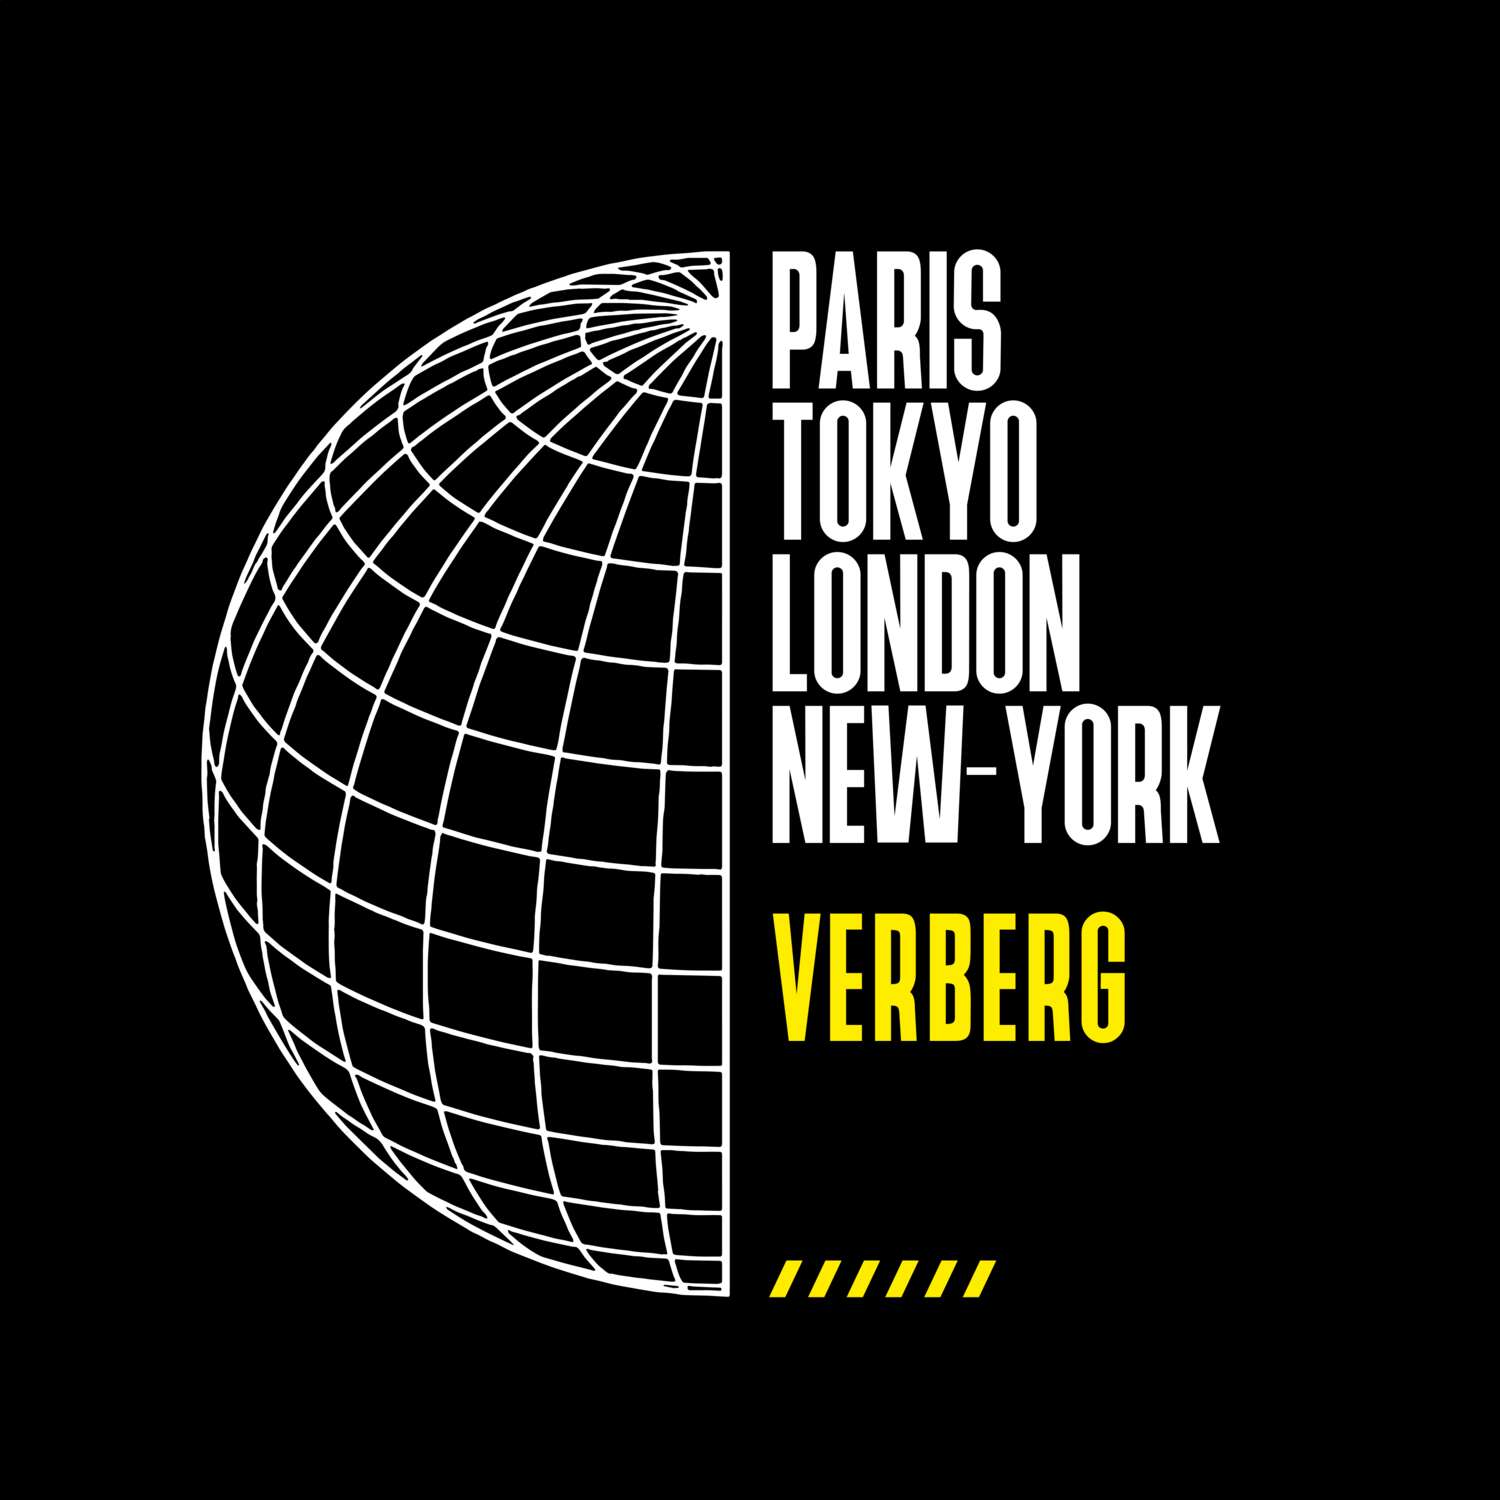 Verberg T-Shirt »Paris Tokyo London«